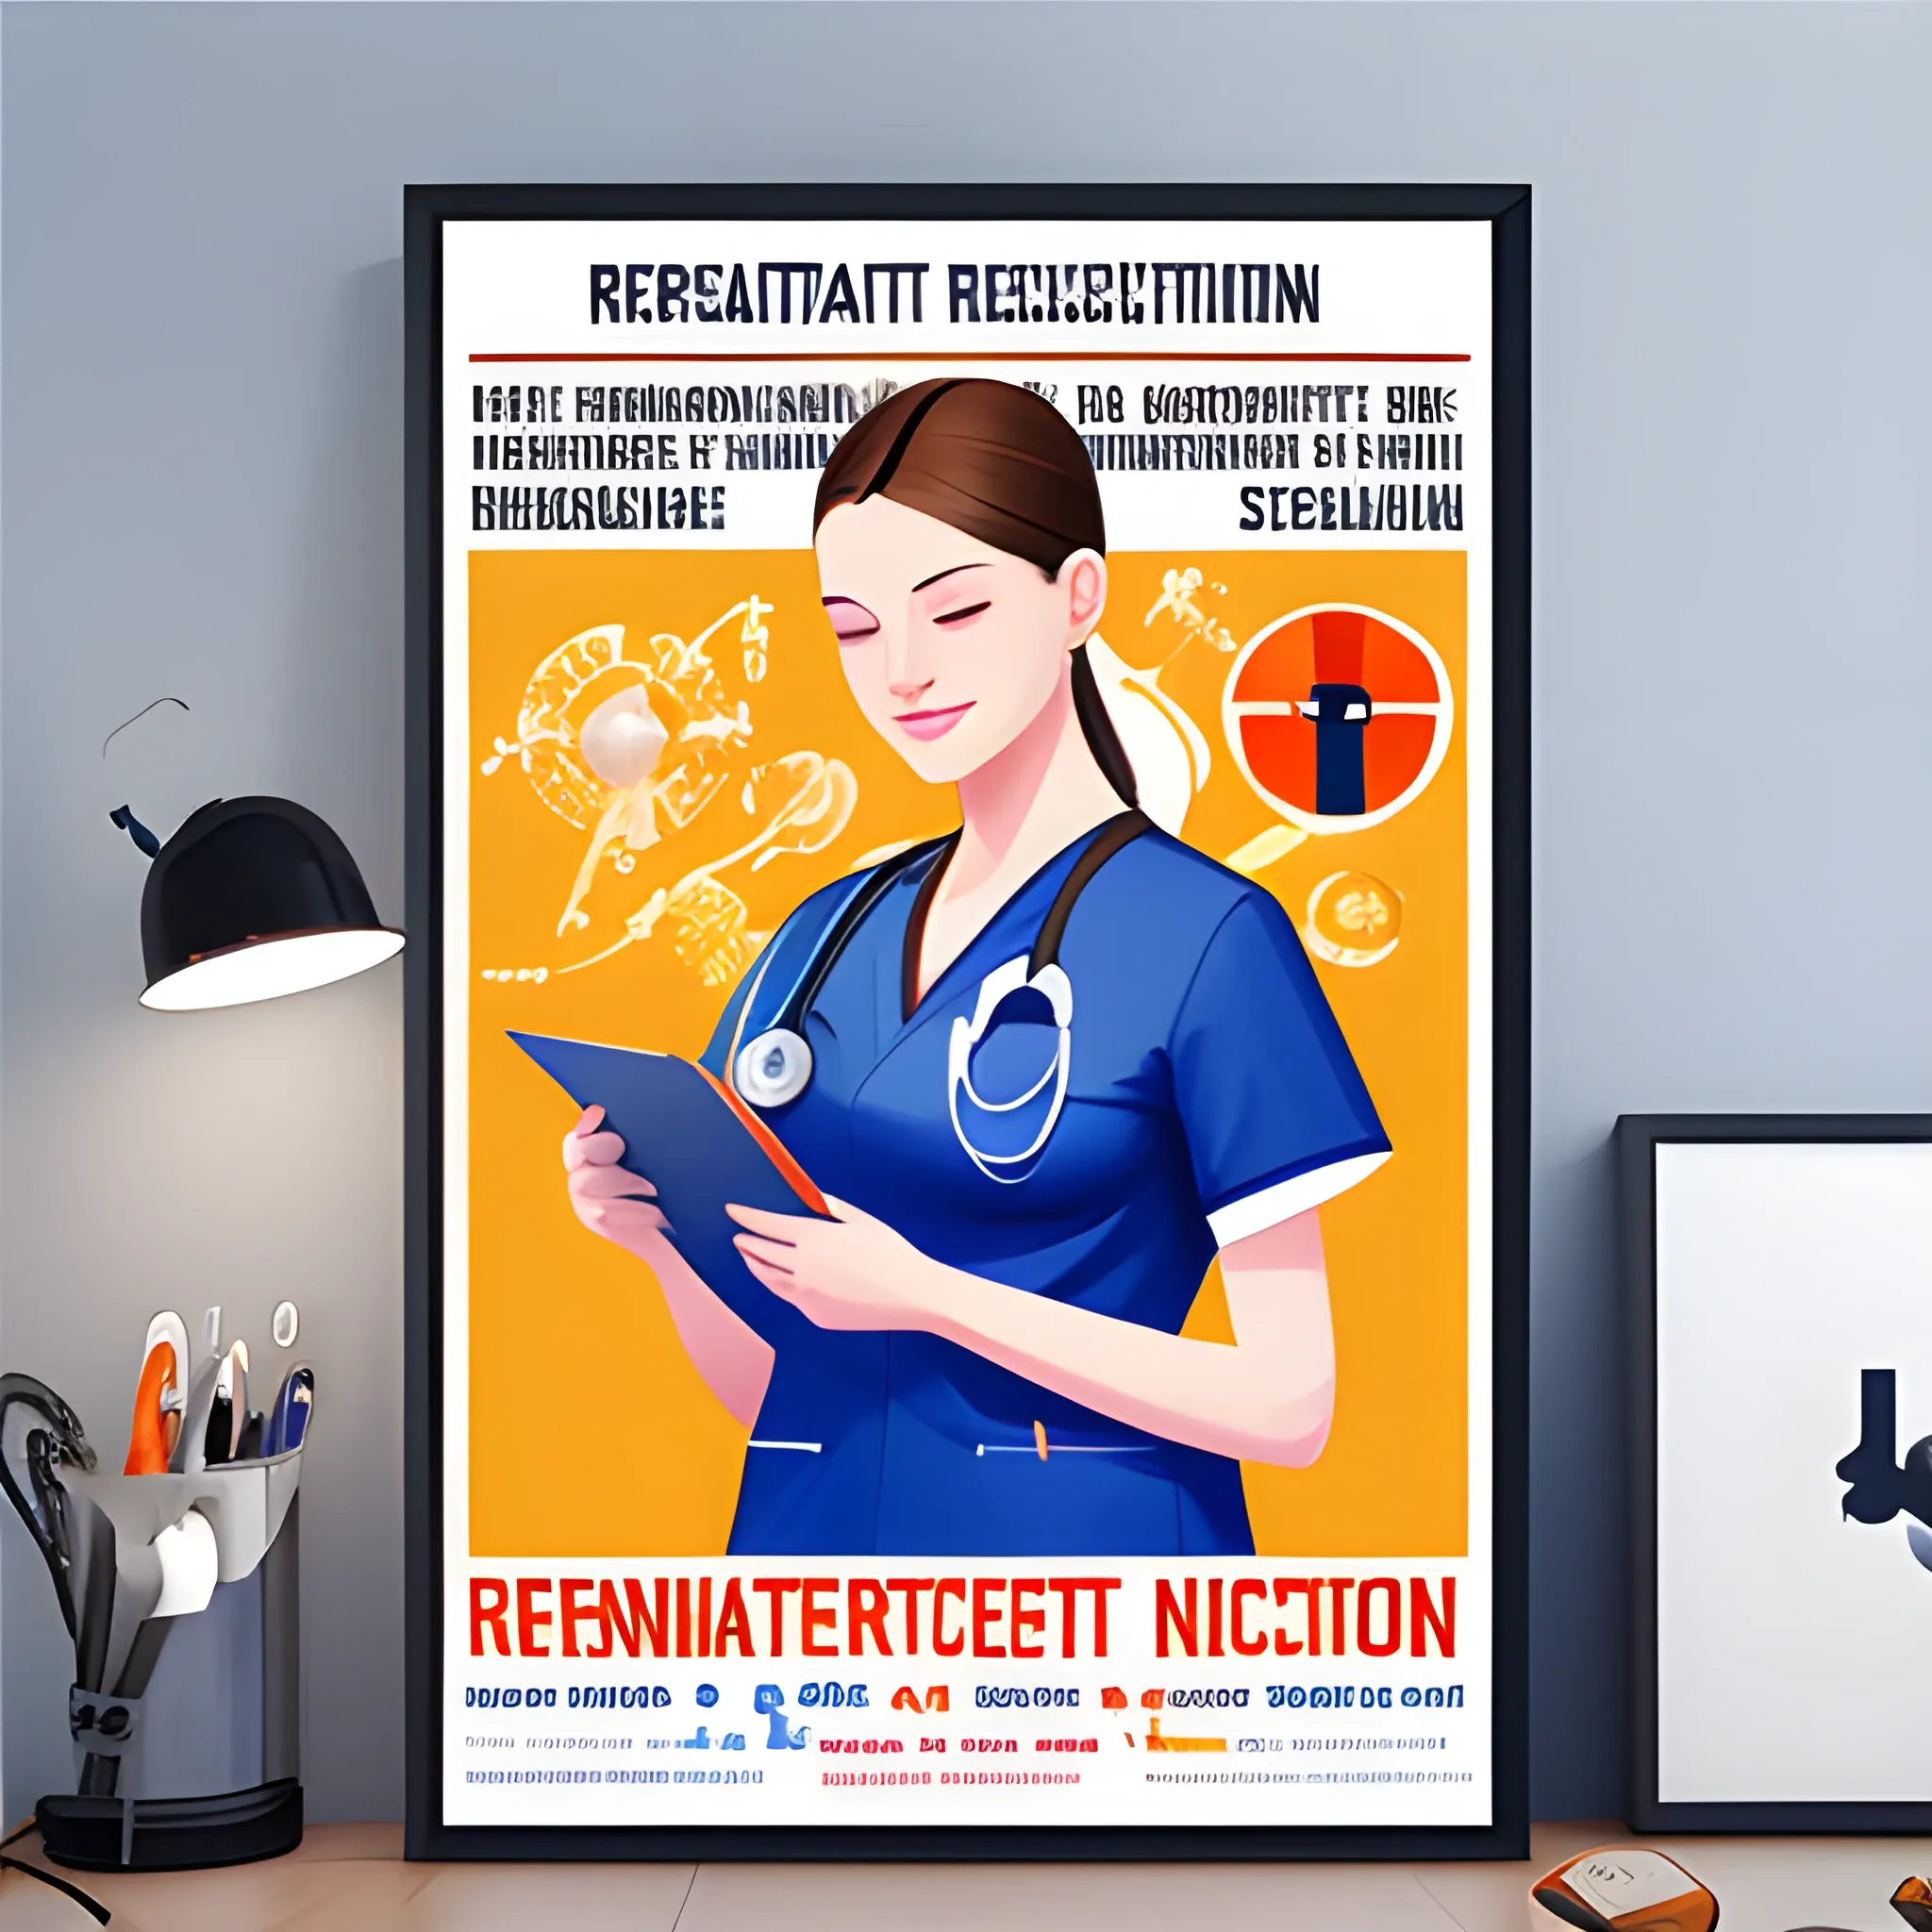 Recruitment poster，Nursing science popularization，Medical science popularization，Computer talent recruitment, Oil Painting